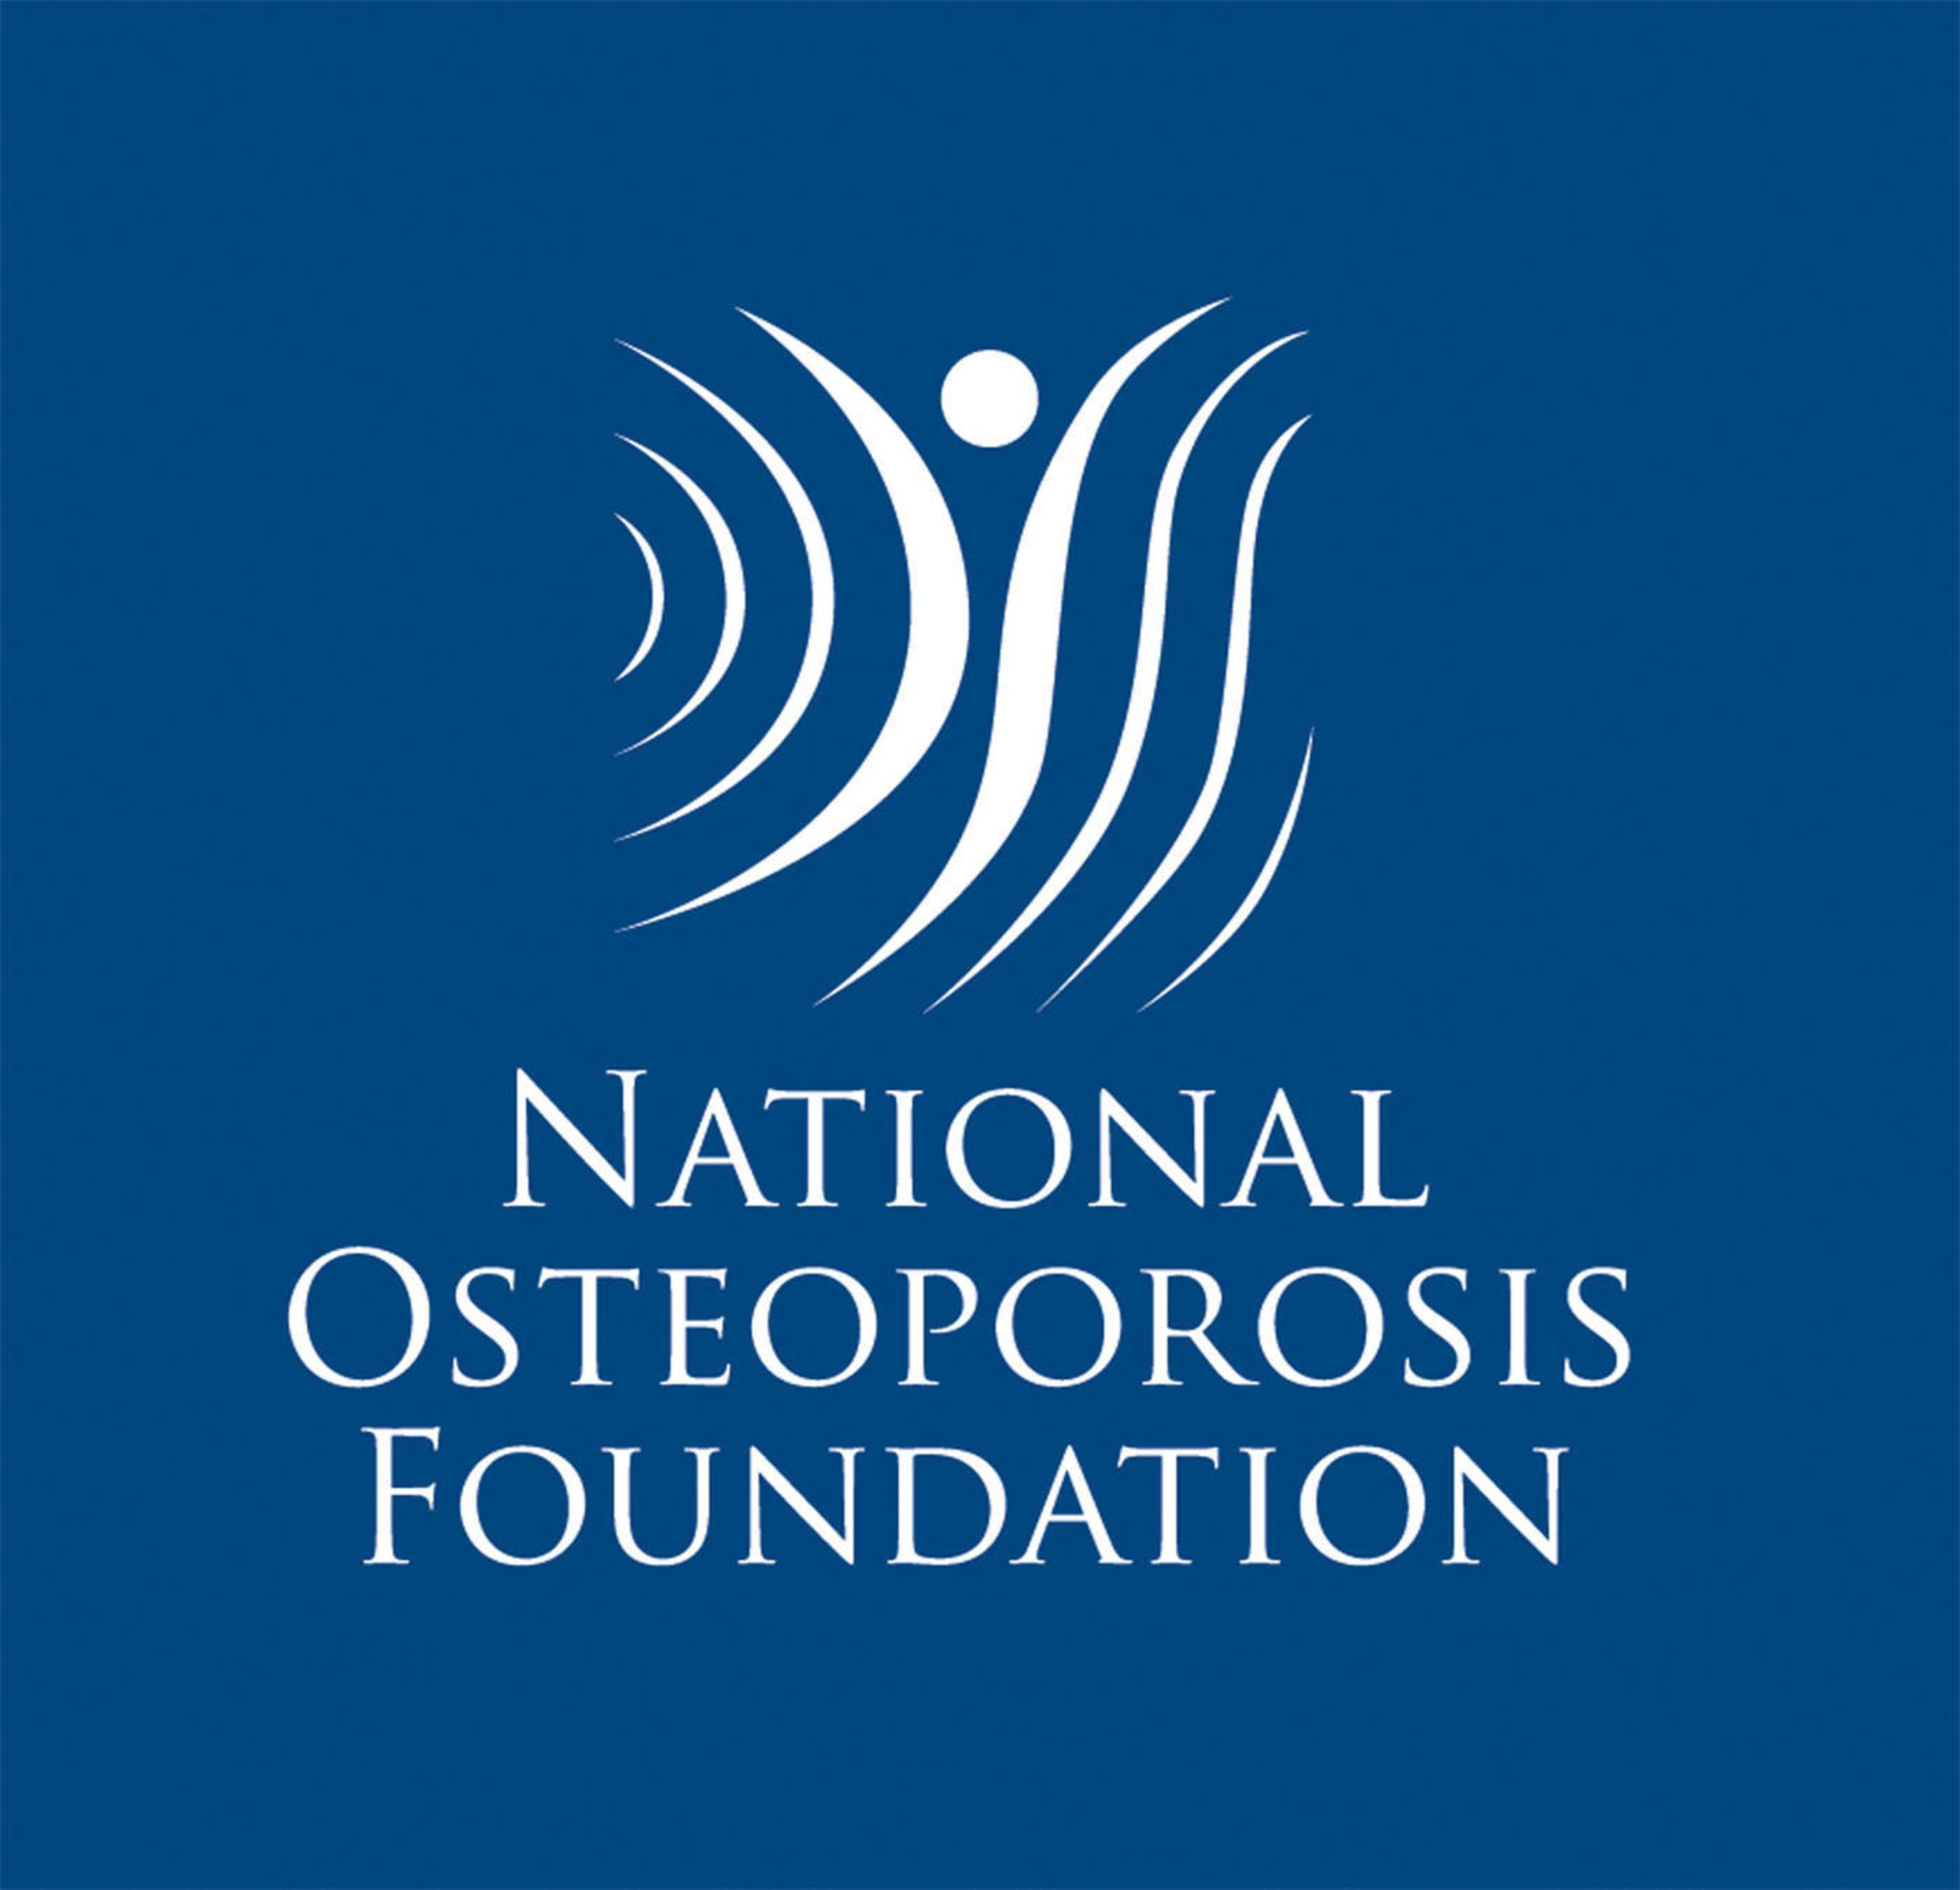 National Osteoporosis Foundation. (PRNewsFoto/National Osteoporosis Foundation) (PRNewsFoto/)